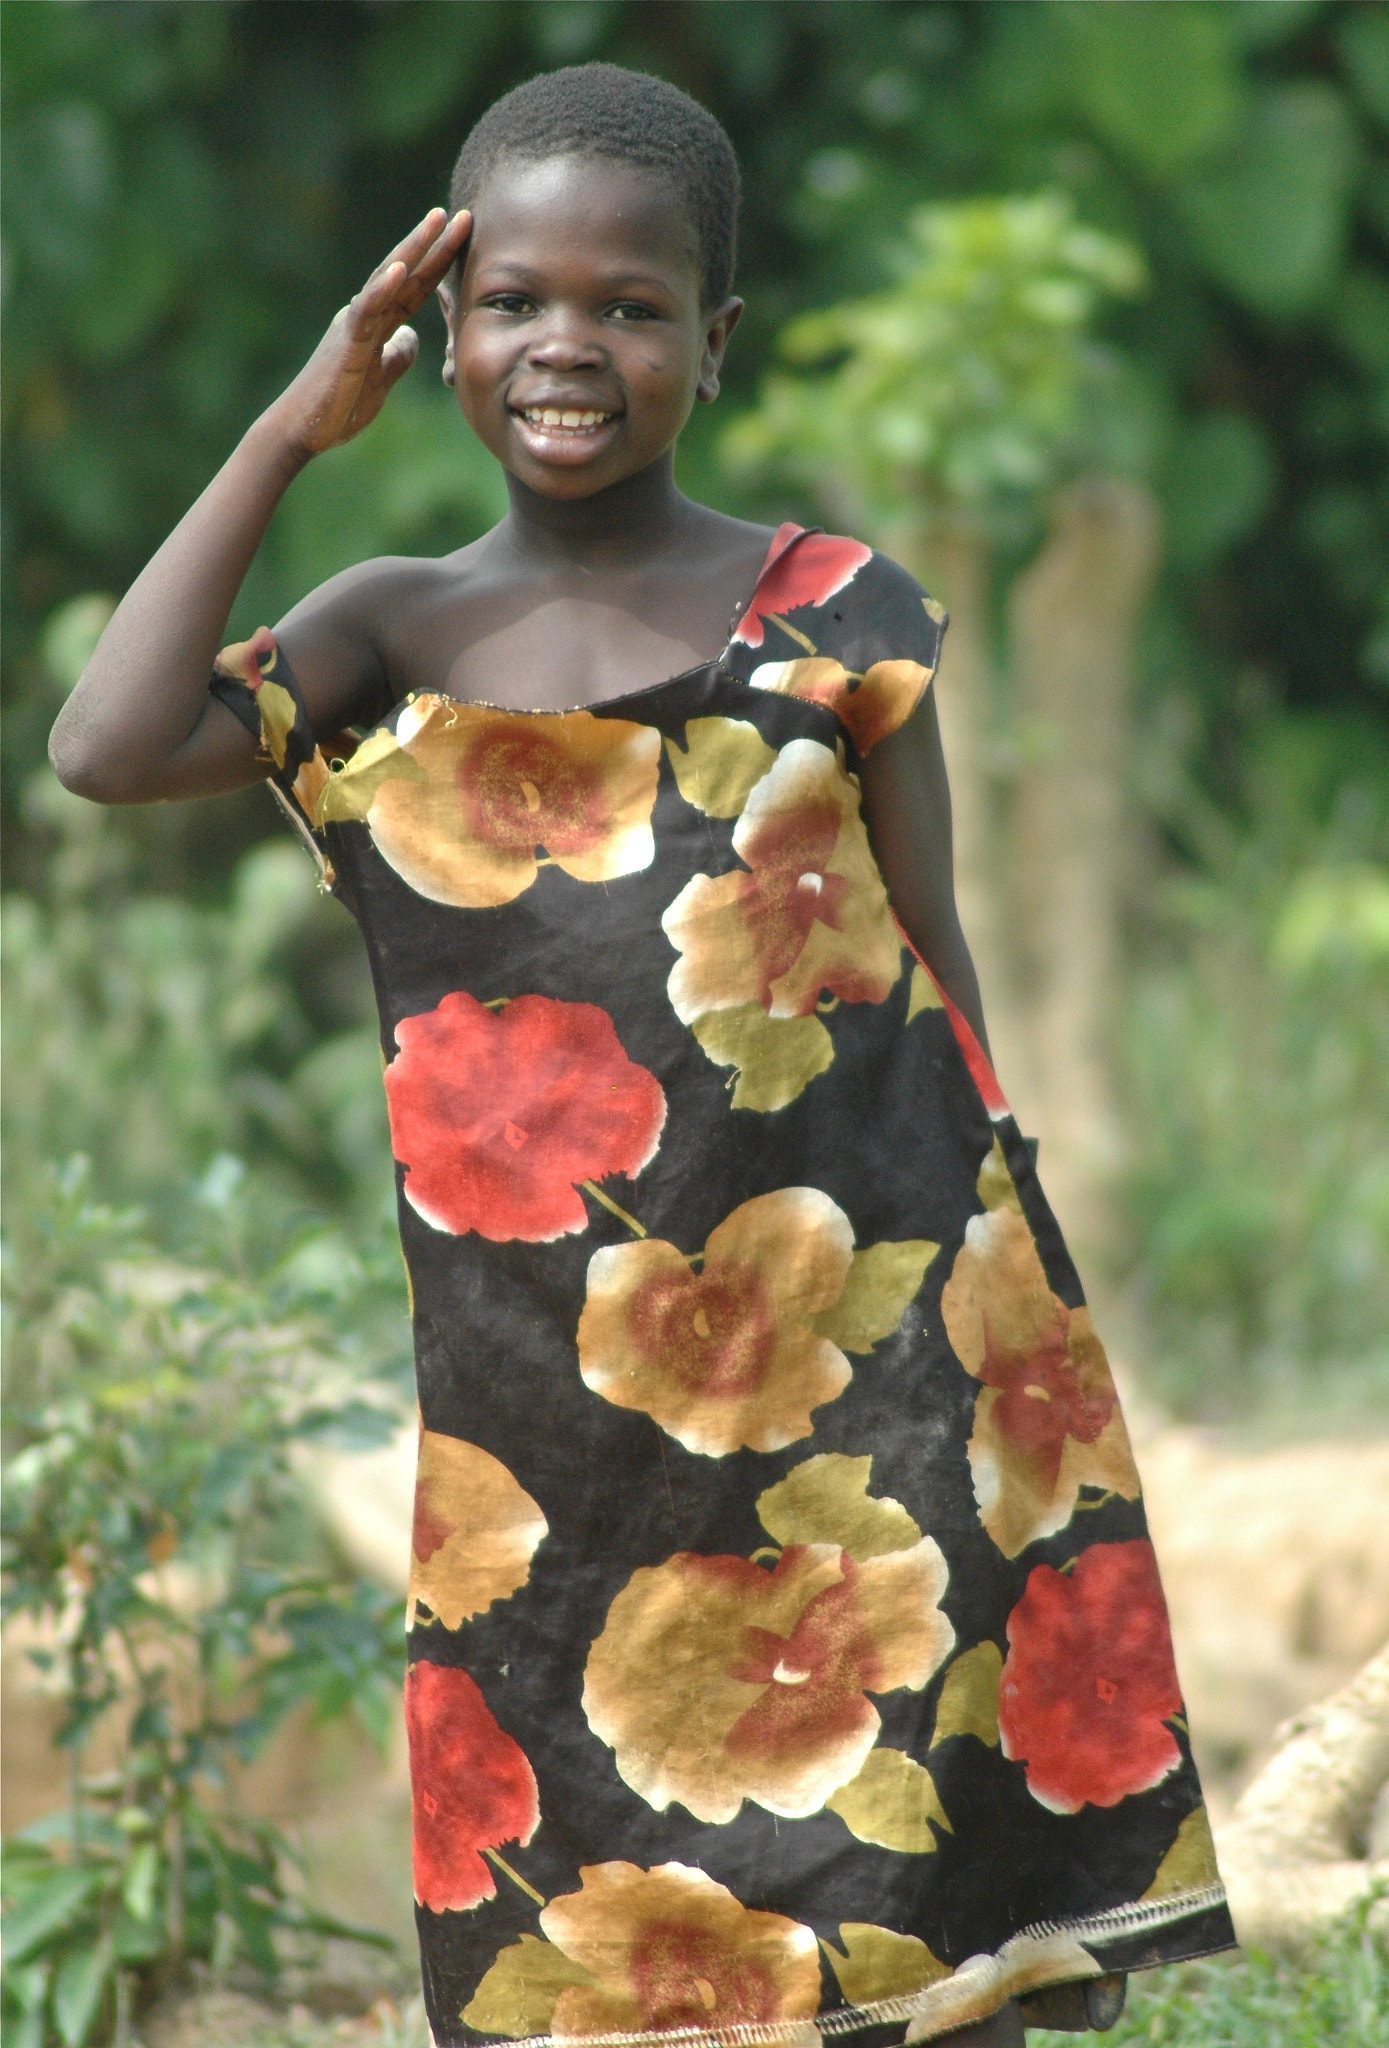 Tamron AF 70-300mm F4-5.6 Di LD Macro sample photo. Africa, west africa, ghana, village girl, child, flower dress, oversized dress, smiling, saluting photography